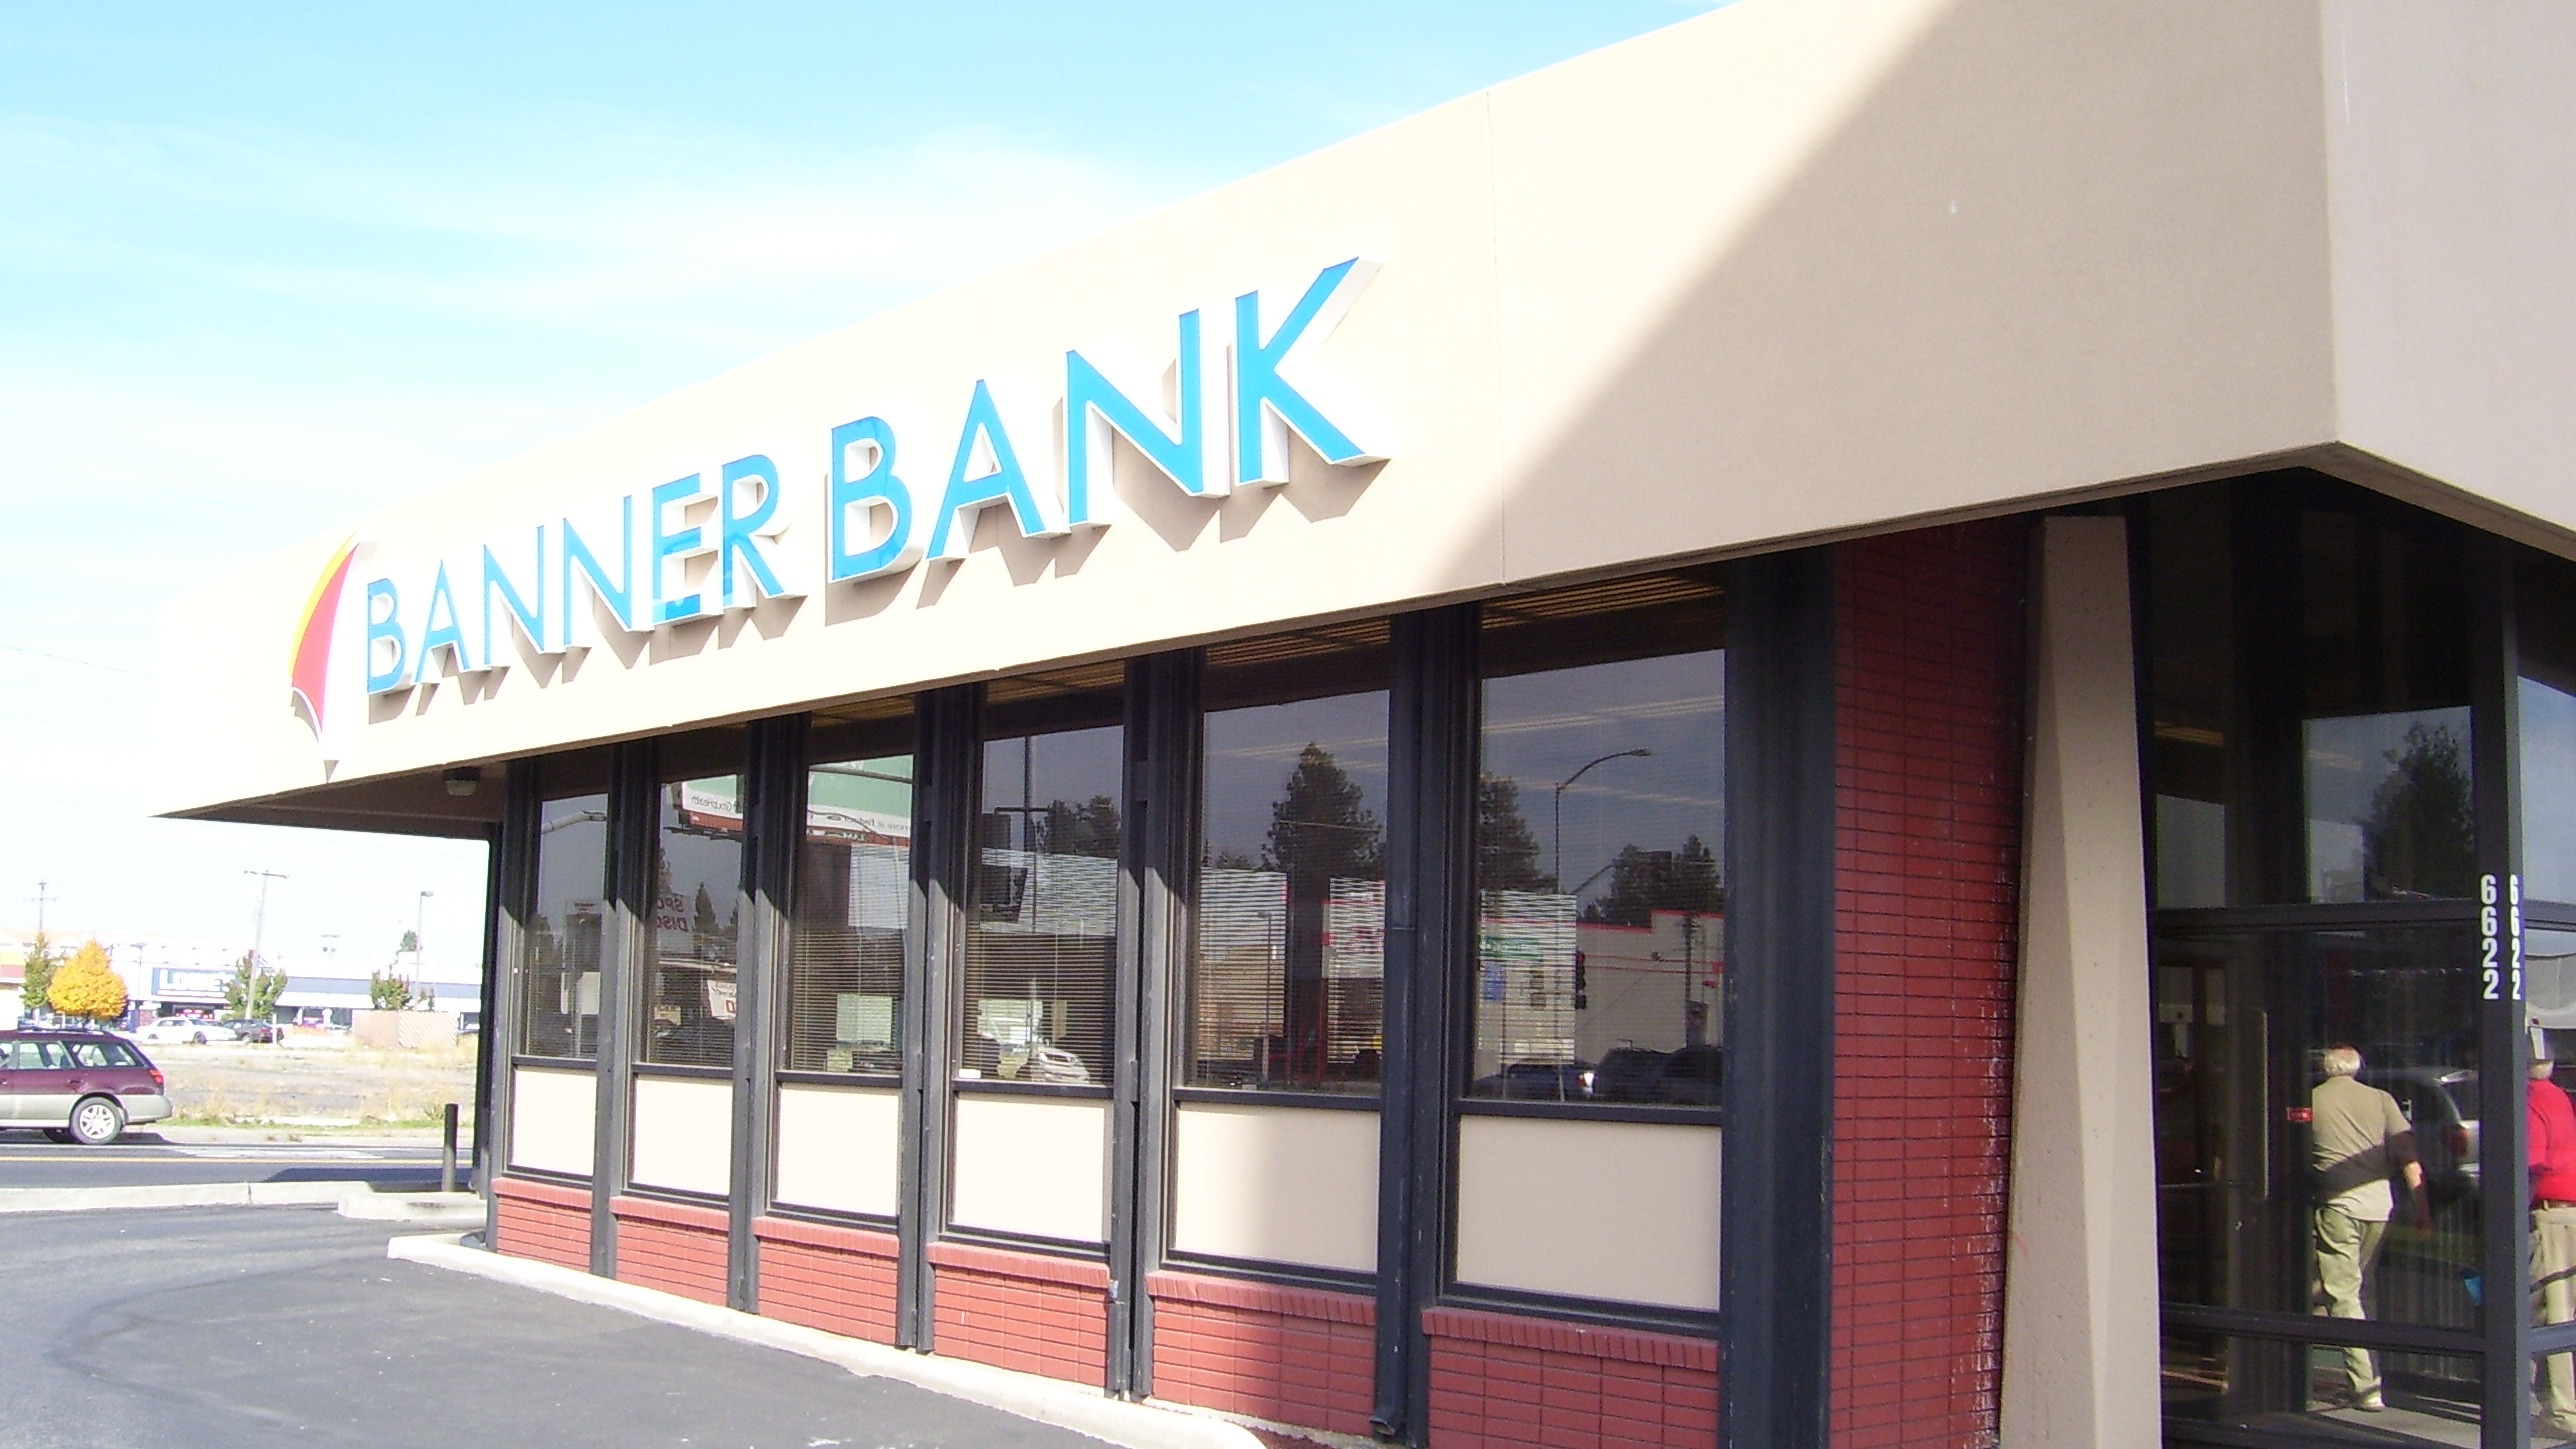 Banner Bank Division Street branch in Spokane, Washington